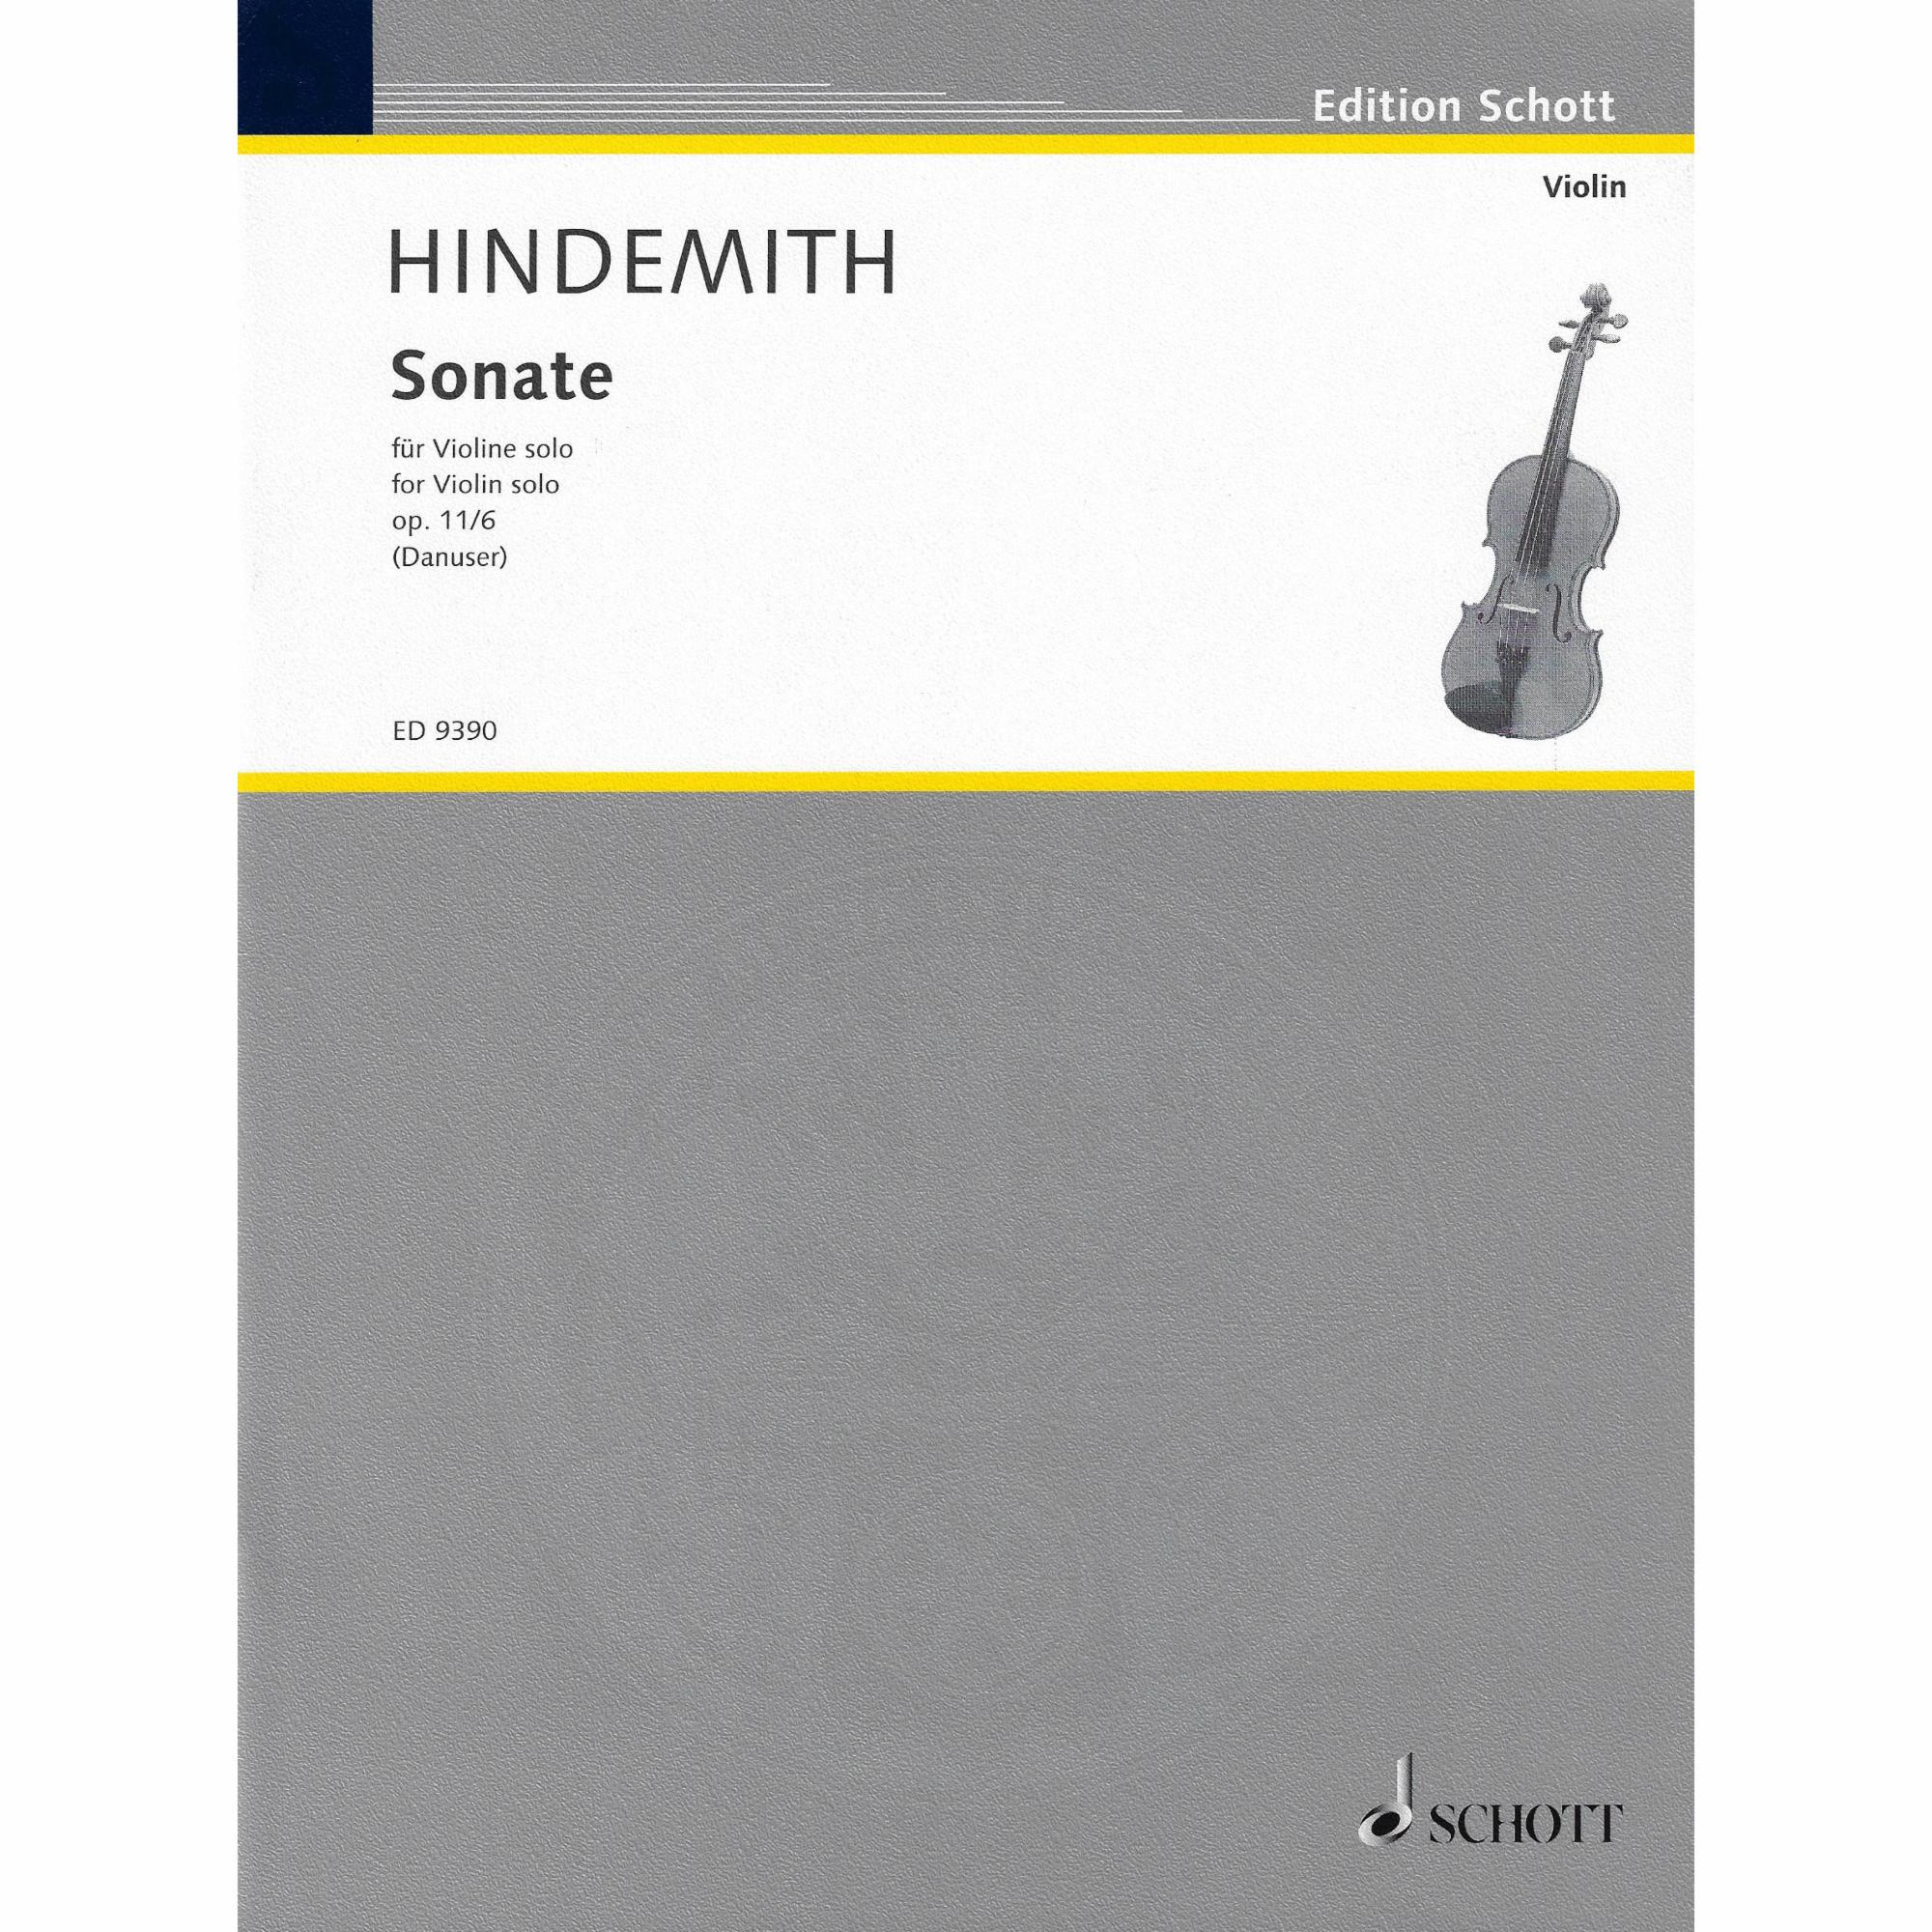 Hindemith -- Sonata, Op. 11/6 for Solo Violin